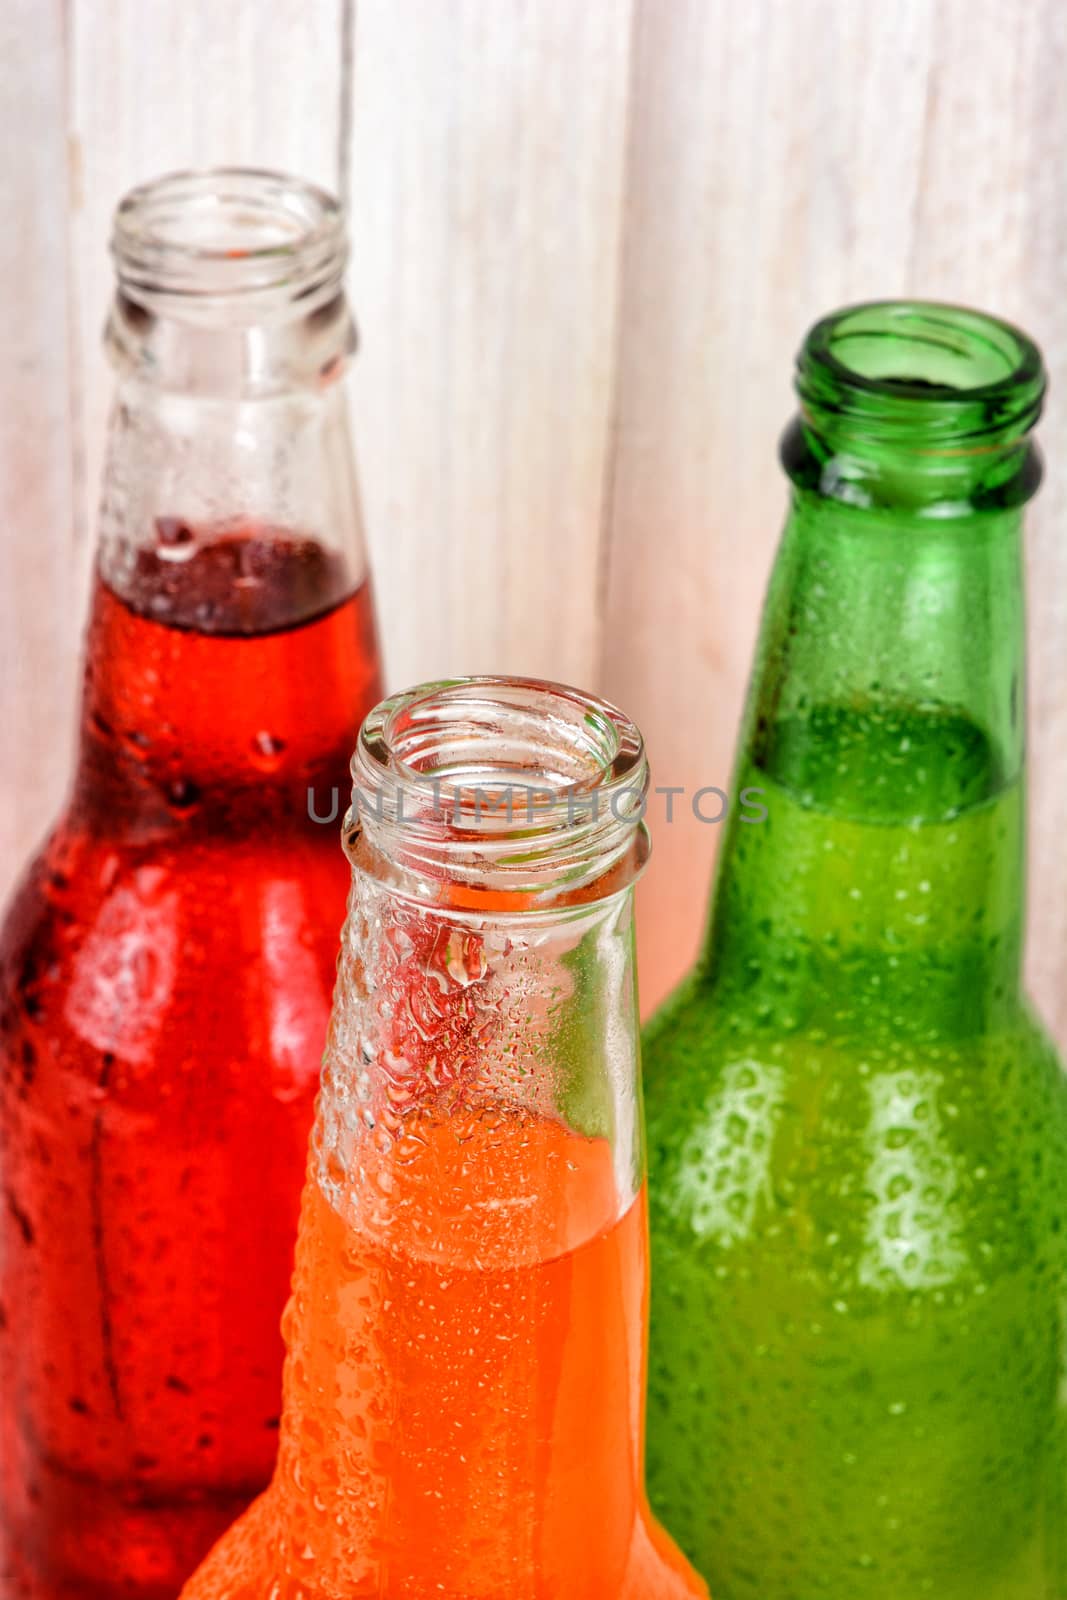 Closeup of soda bottle necks with condensation.